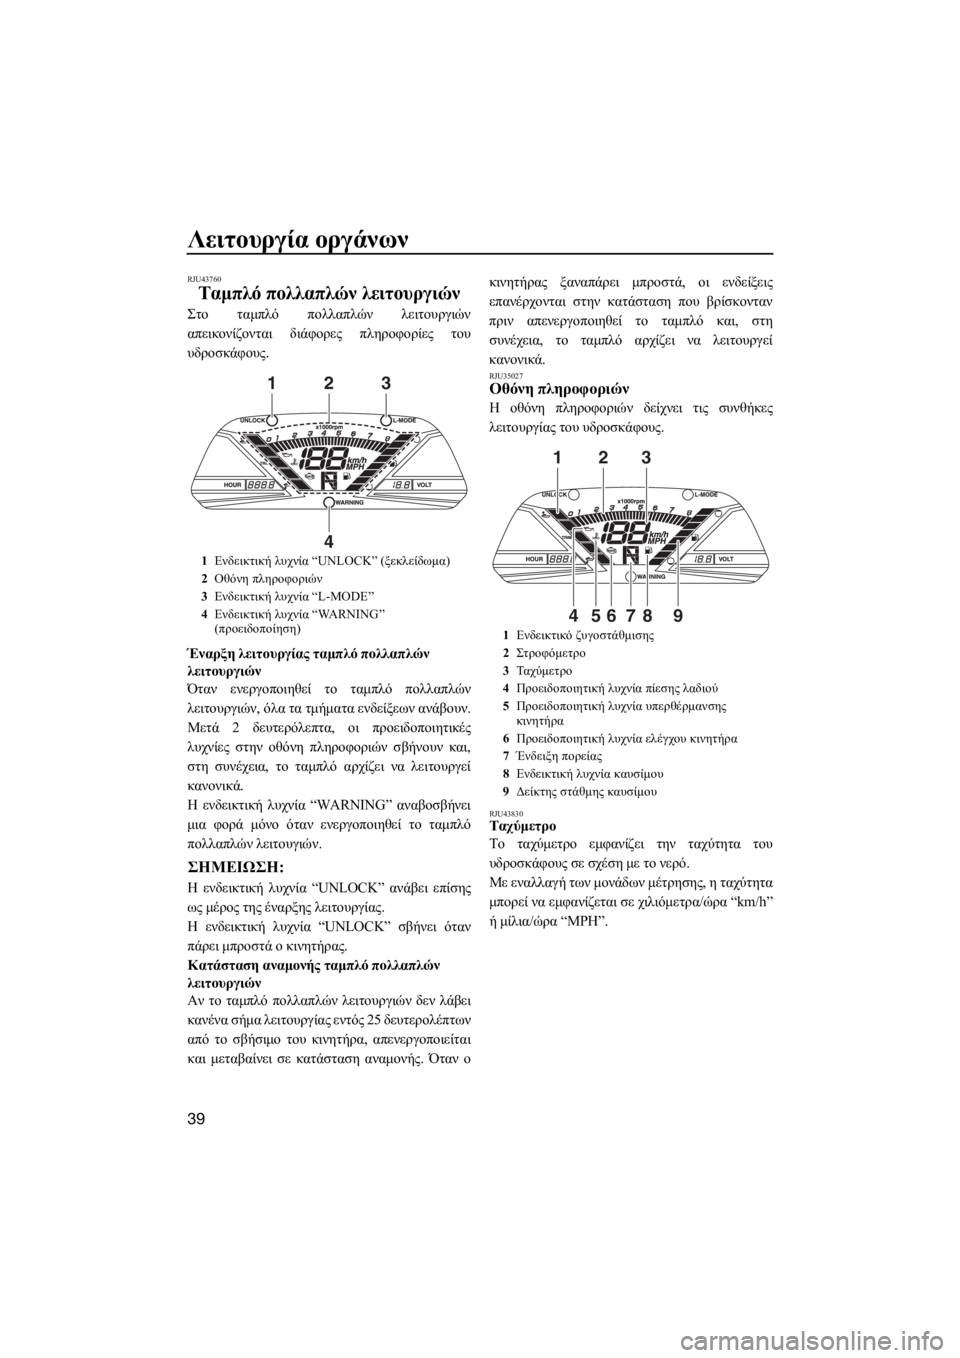 YAMAHA VXR 2015  ΟΔΗΓΌΣ ΧΡΉΣΗΣ (in Greek) Λειτουργία οργάνων
39
RJU43760
Ταμπλό πολλαπλών λειτουργιών
Στο ταμπλό πολλαπλών λειτουργιών
απεικονίζονται διά